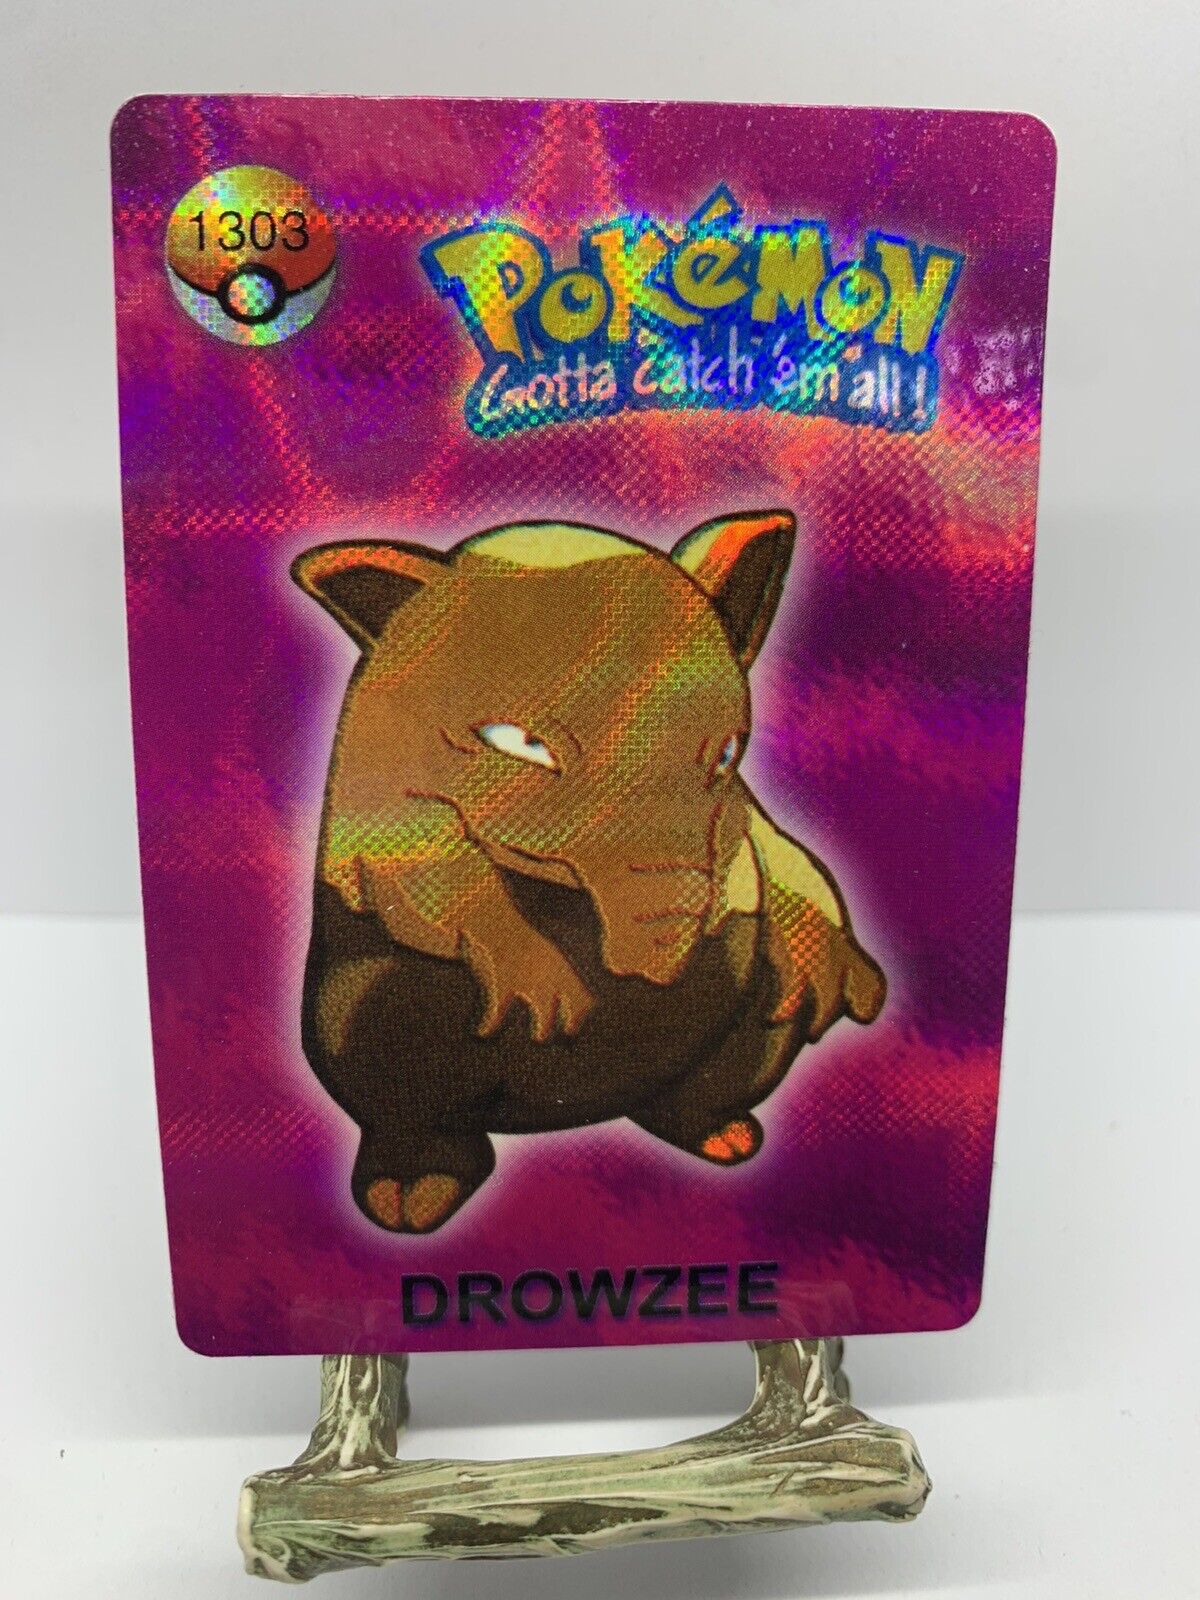 Drowzee 1303 Vintage Pokémon Holo Prism Sticker Card